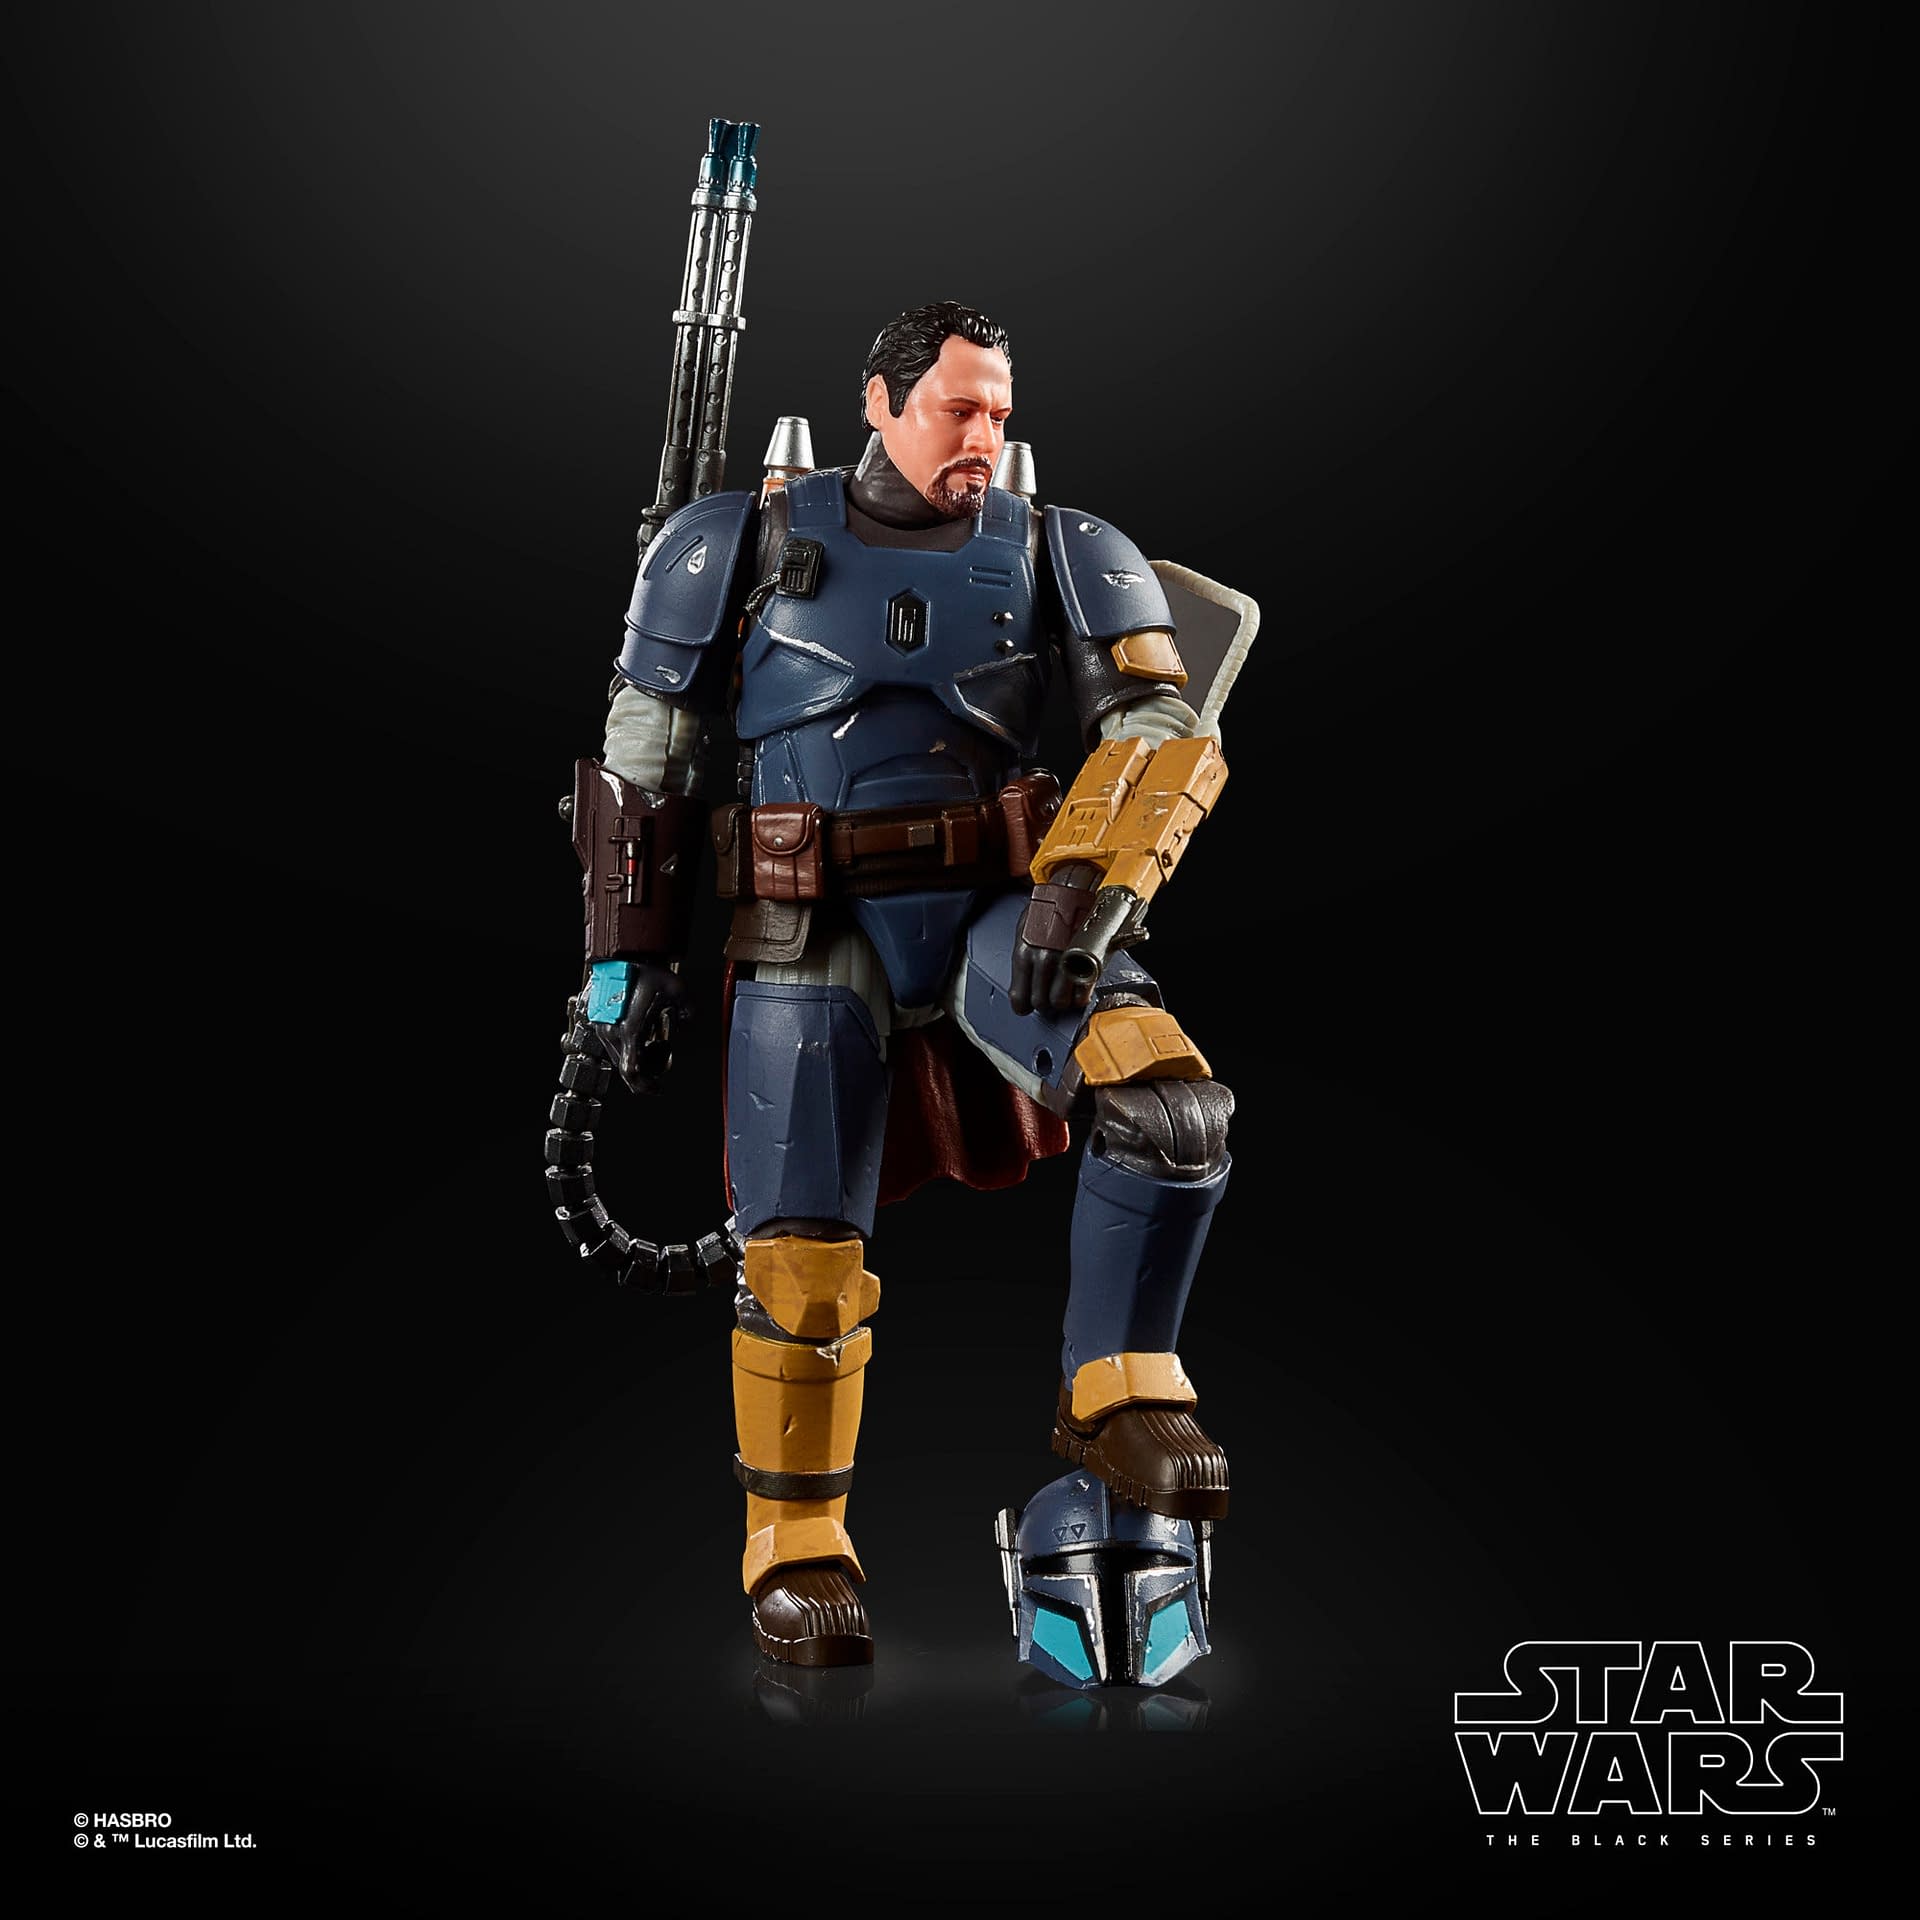 Hasbro Announces Exclusive Star Wars Jon Favreau Black Series Figure 